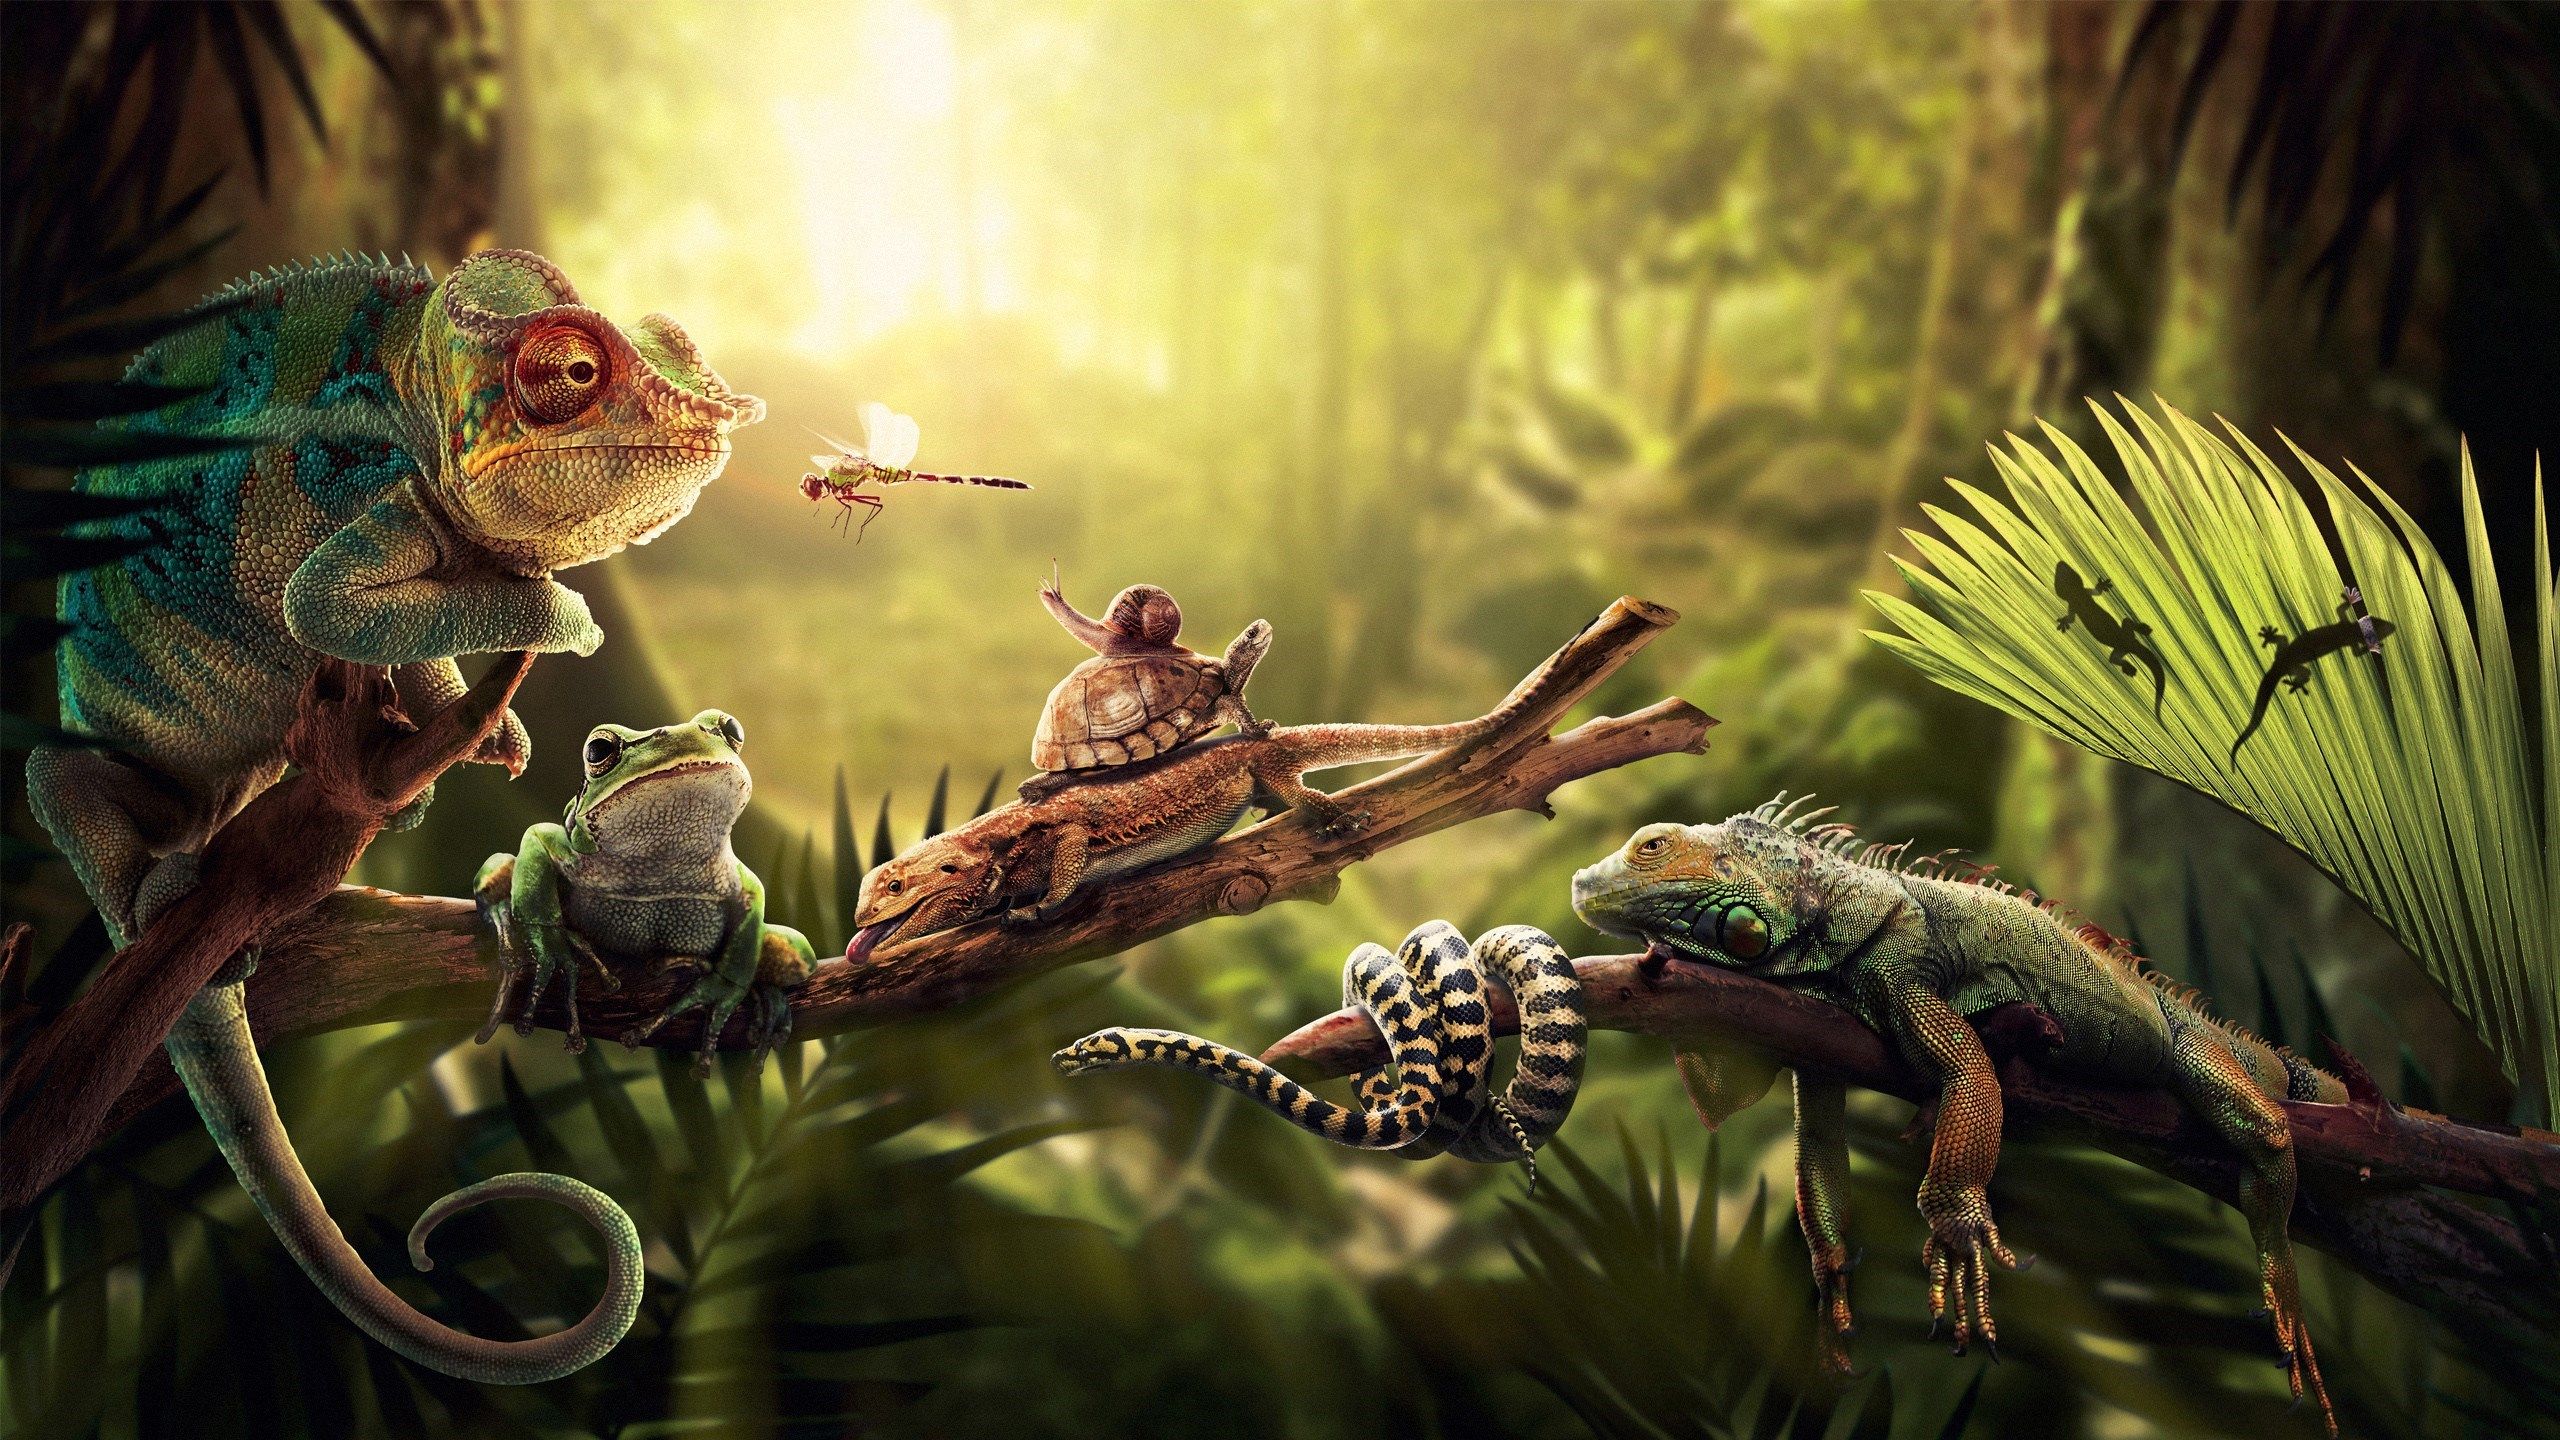 HD wallpaper, Snail, Lizards, Iguana, Frog, Snake, Turtle, Dragonfly